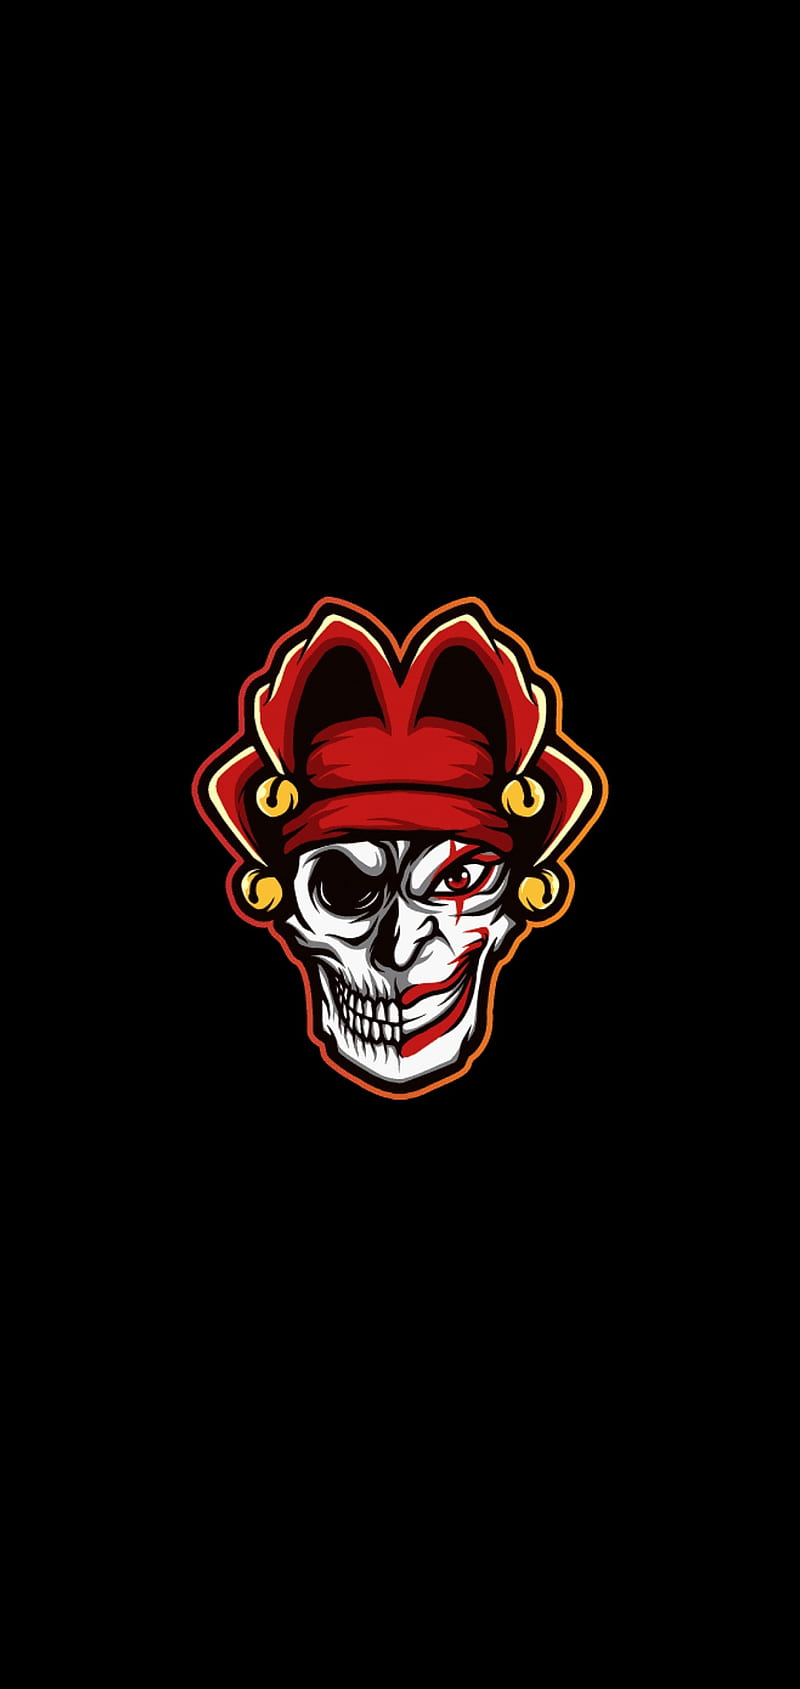 Skull fire mascot esport logo design | Stock vector | Colourbox